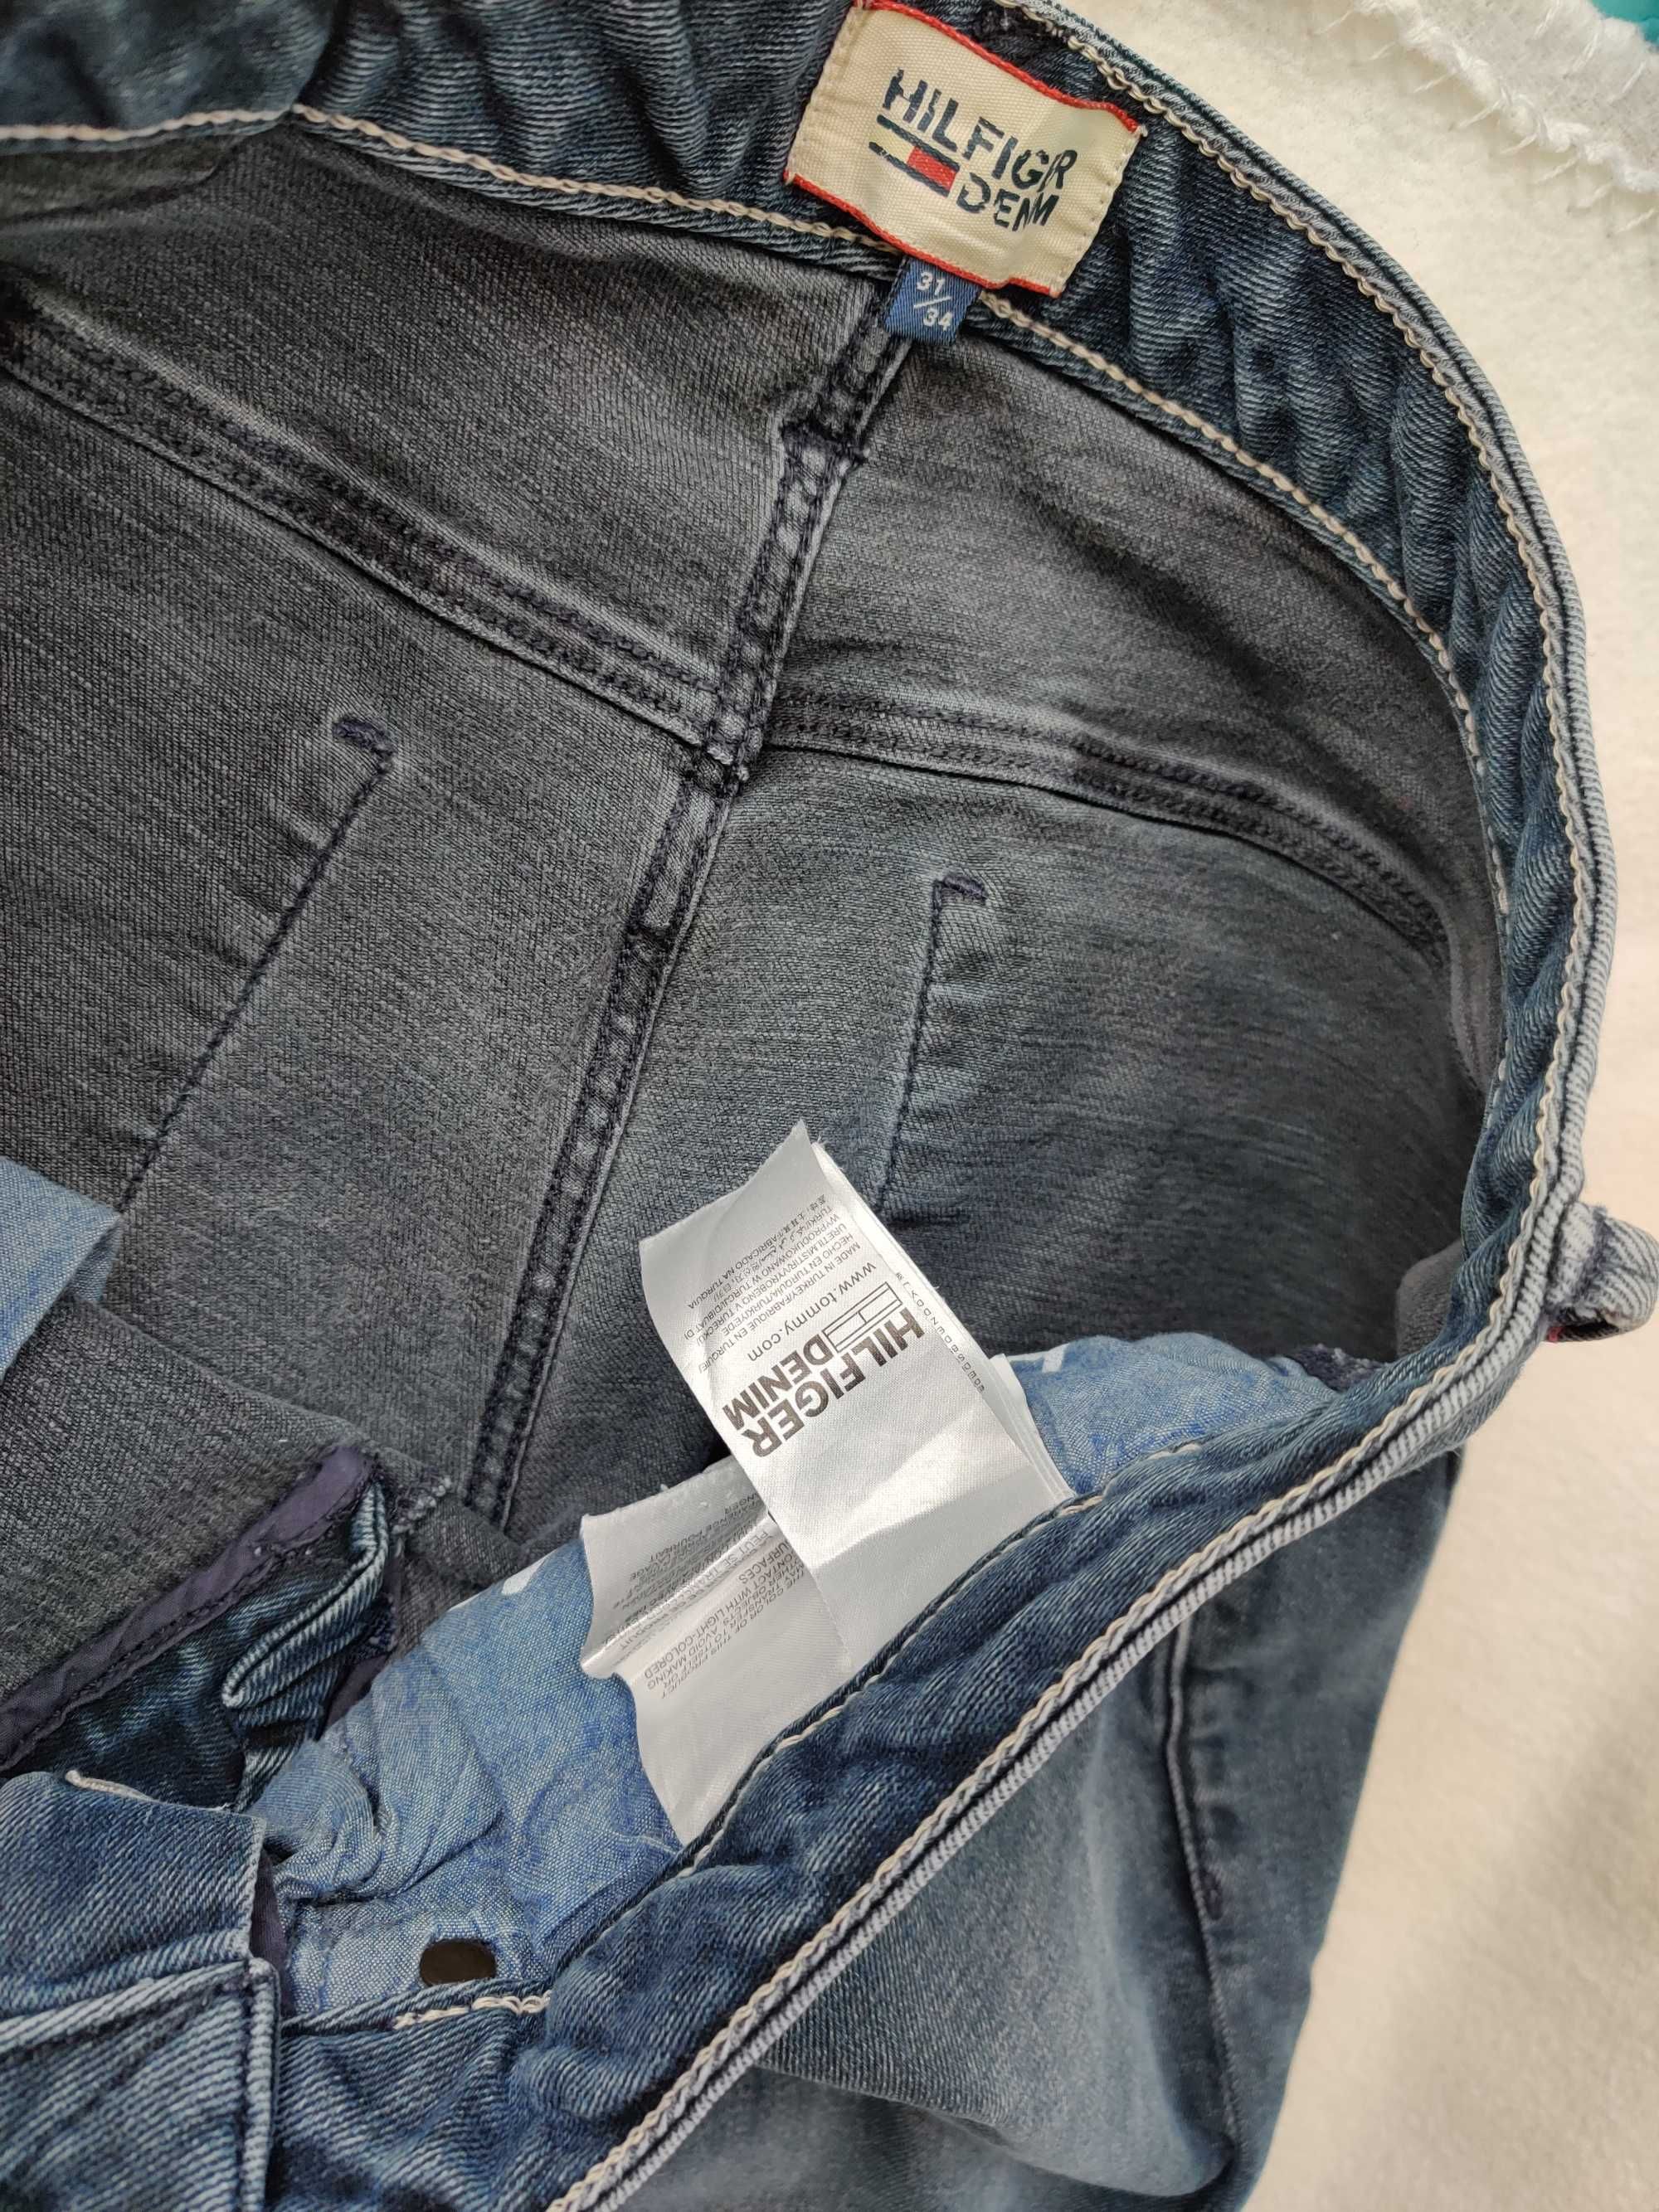 Spodnie Tommy Hilfiger Jeans Scanton 31/34 okazja męskie